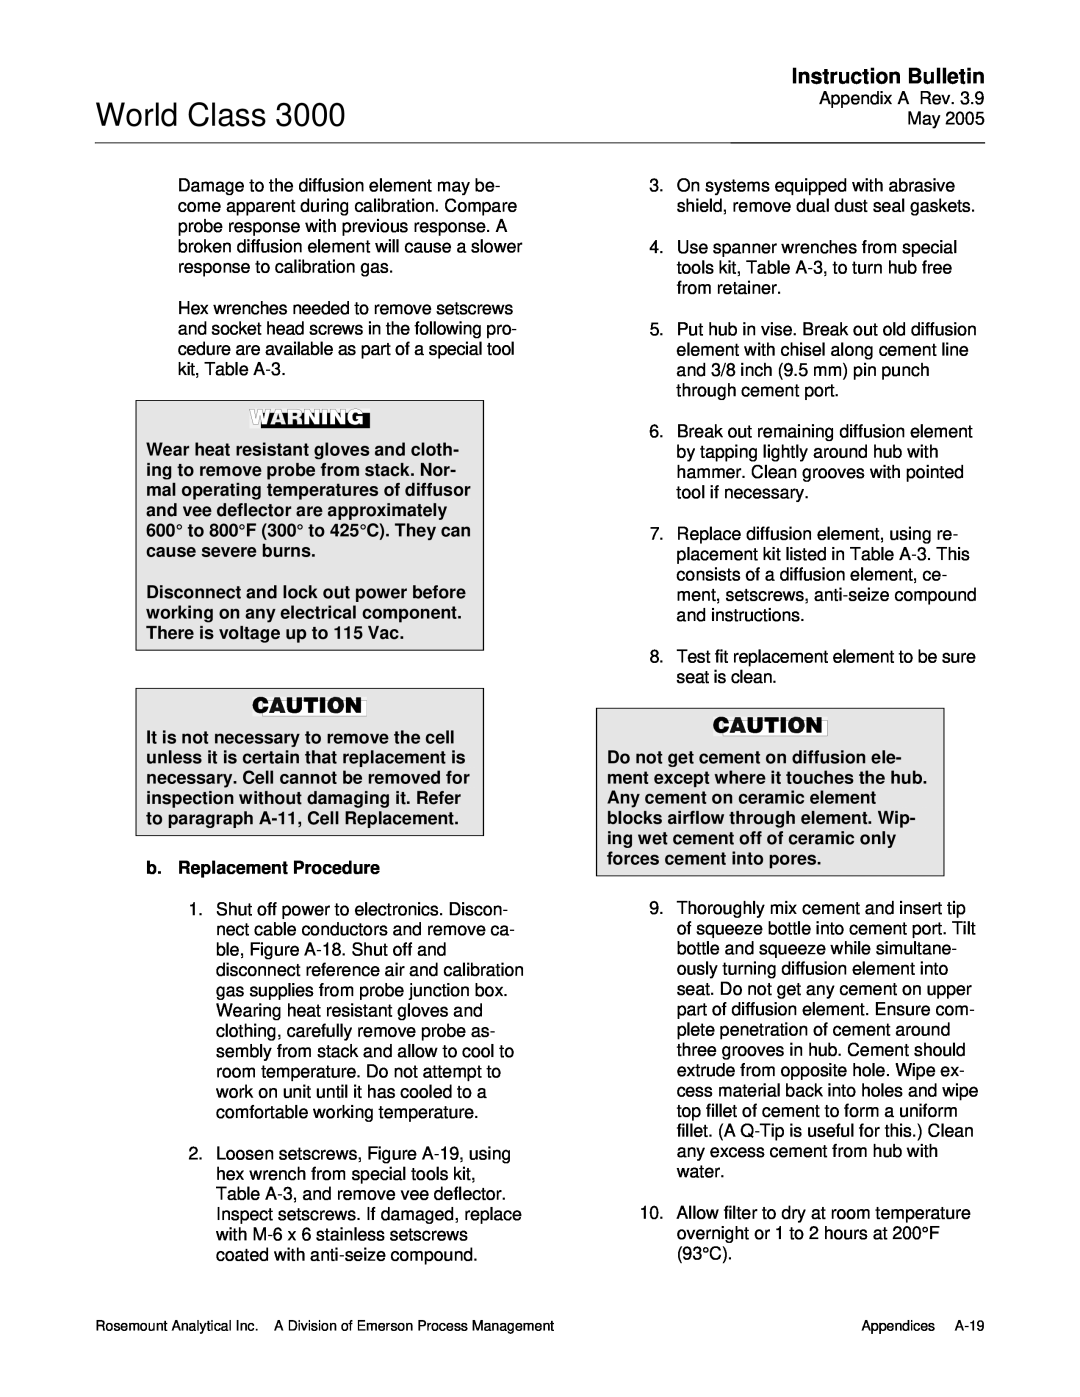 Emerson 3000 instruction manual World Class, Instruction Bulletin, b.Replacement Procedure 